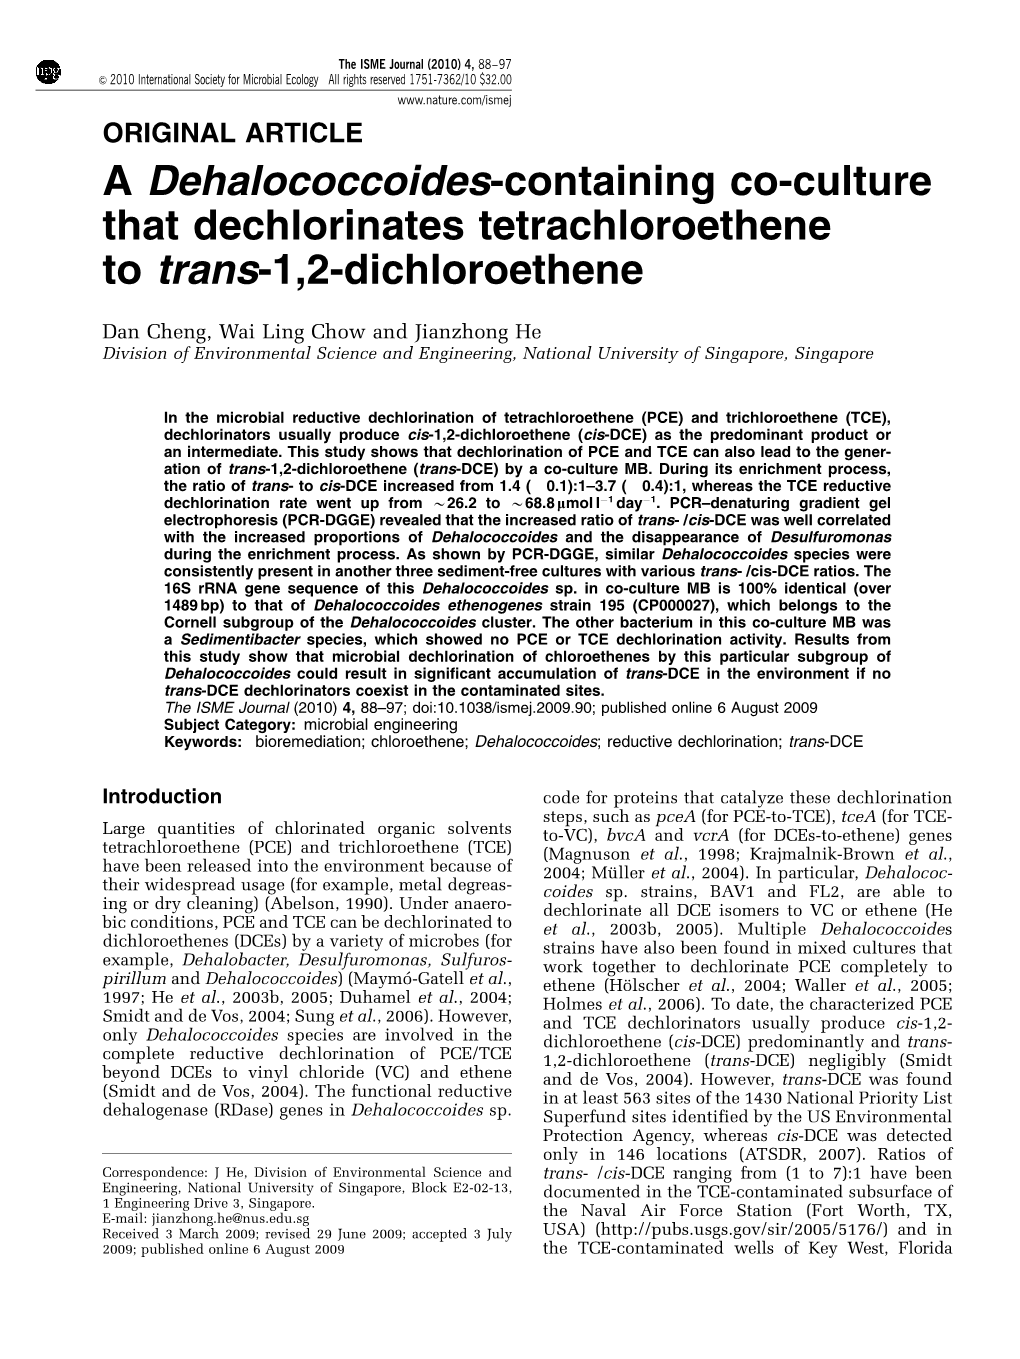 A Dehalococcoides-Containing Co-Culture That Dechlorinates Tetrachloroethene to Trans-1,2-Dichloroethene